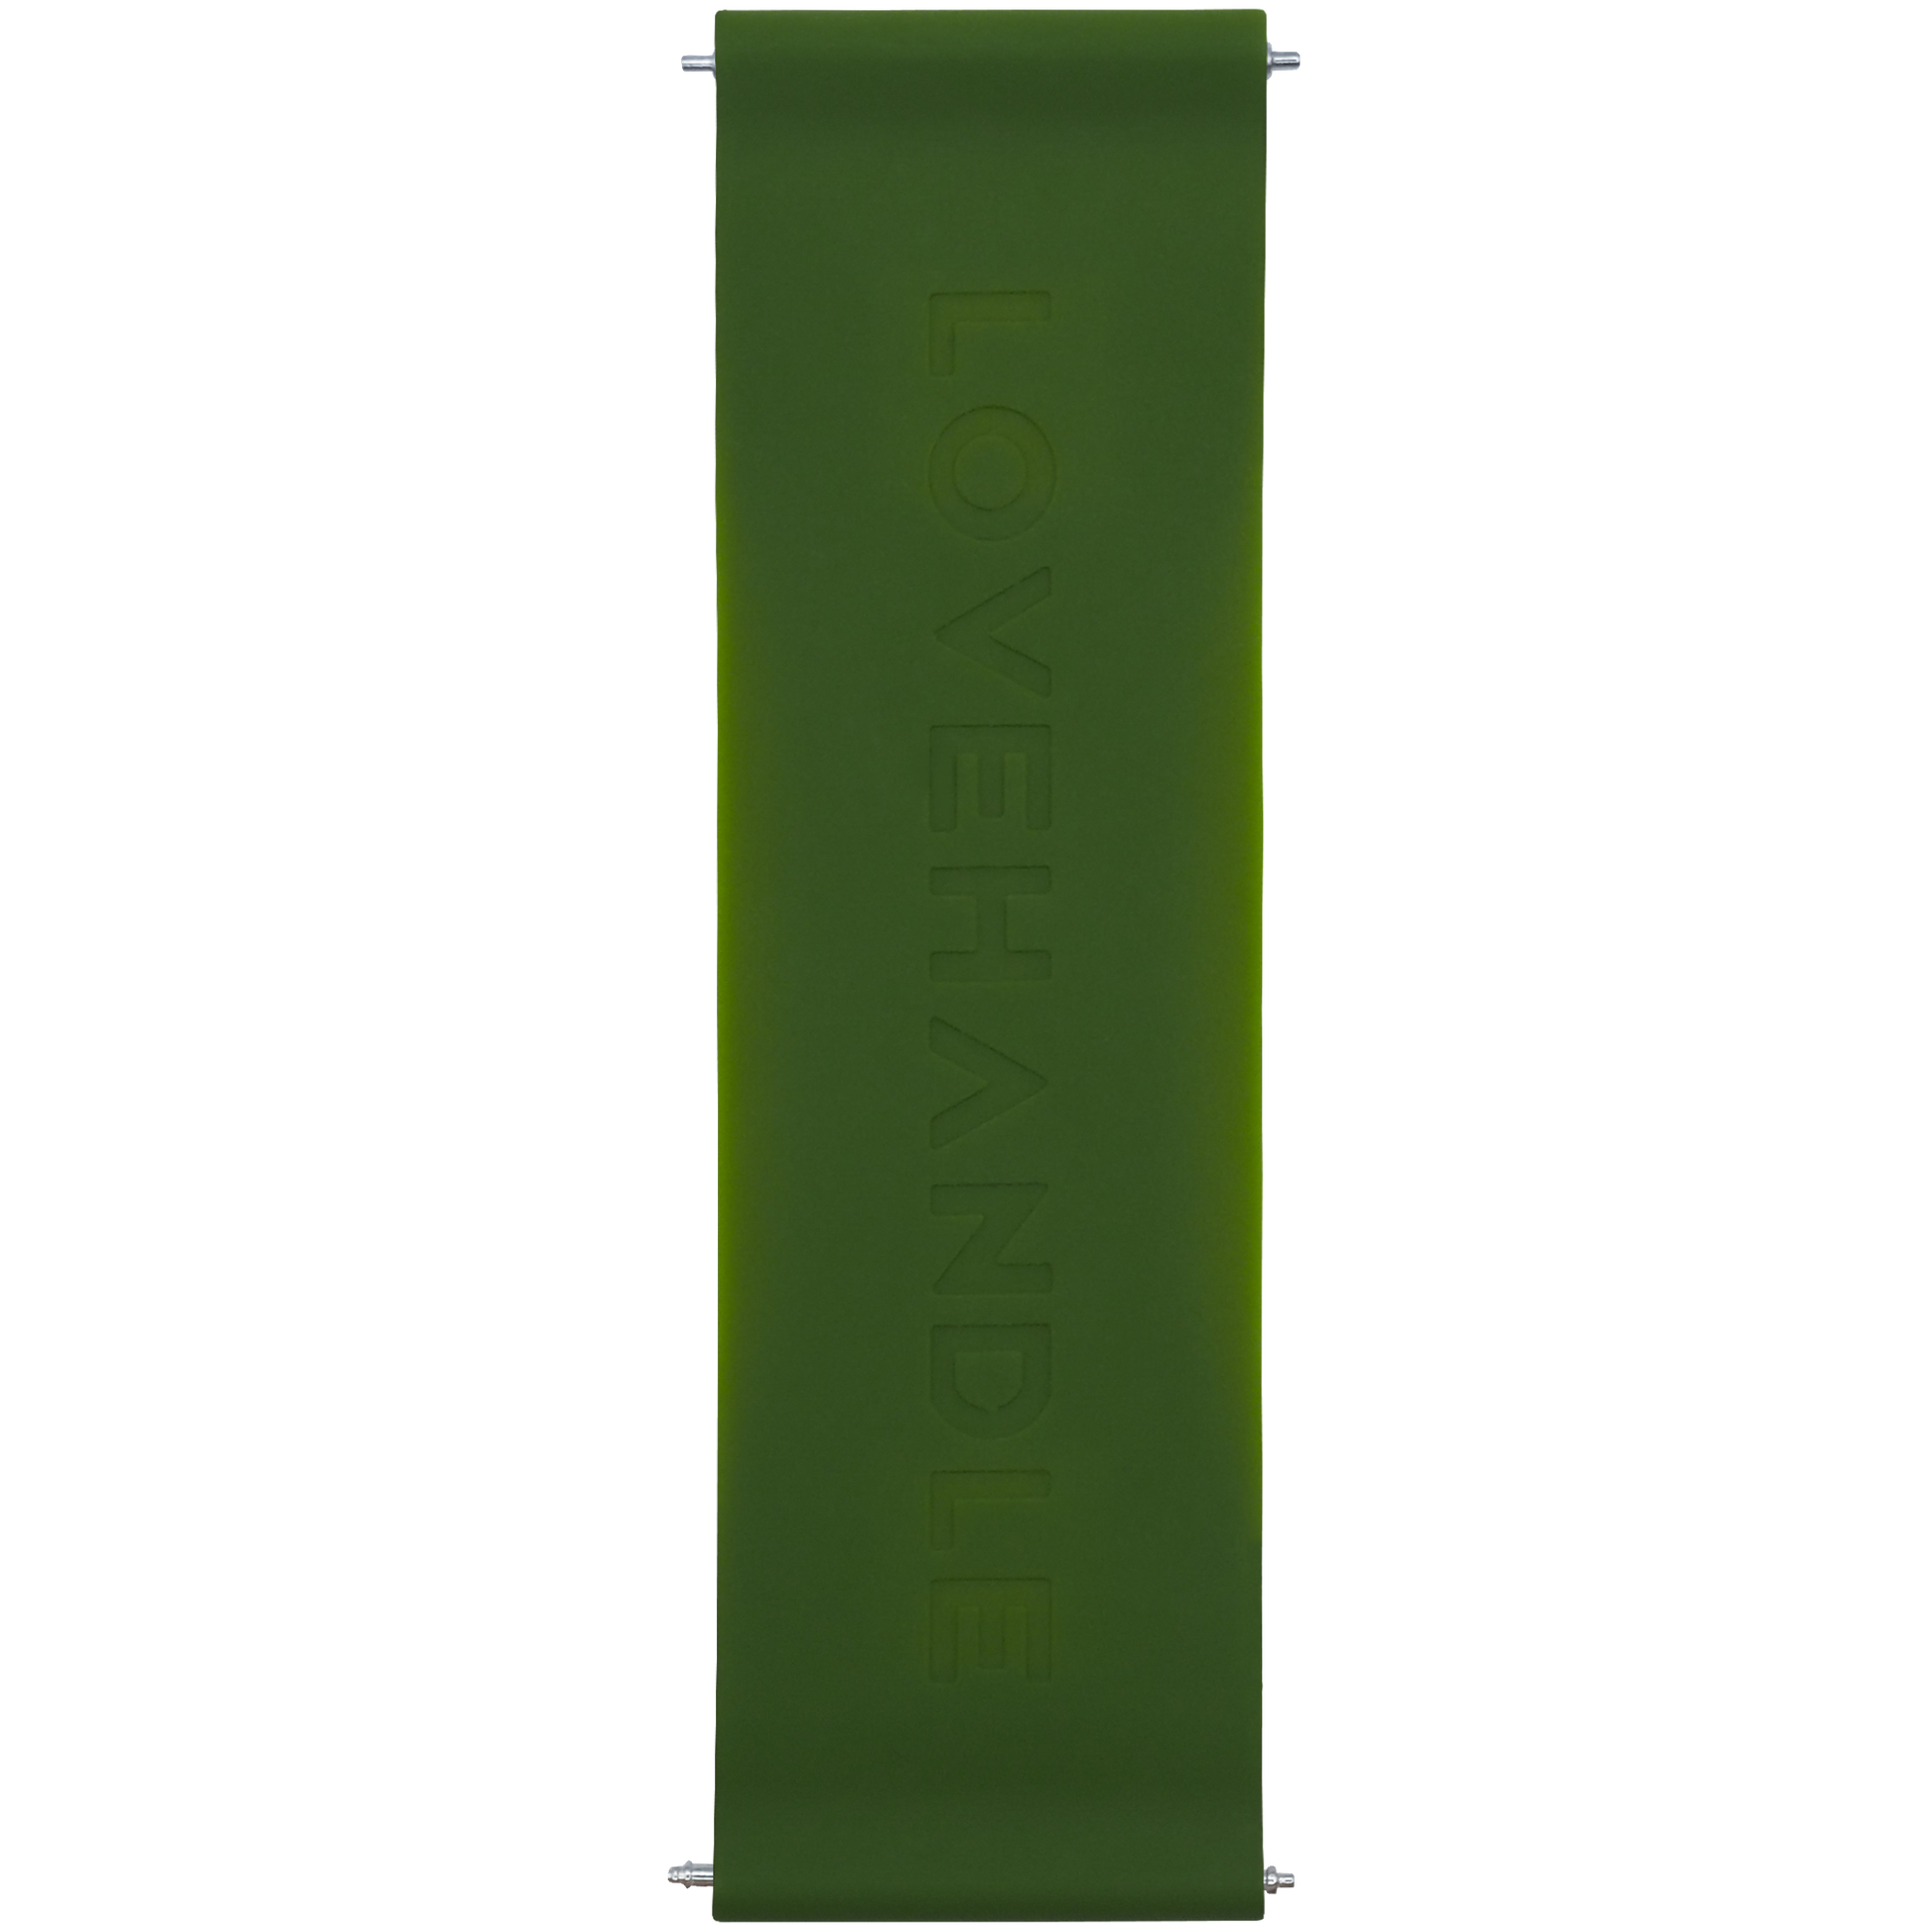 PRO Strap - Army Green